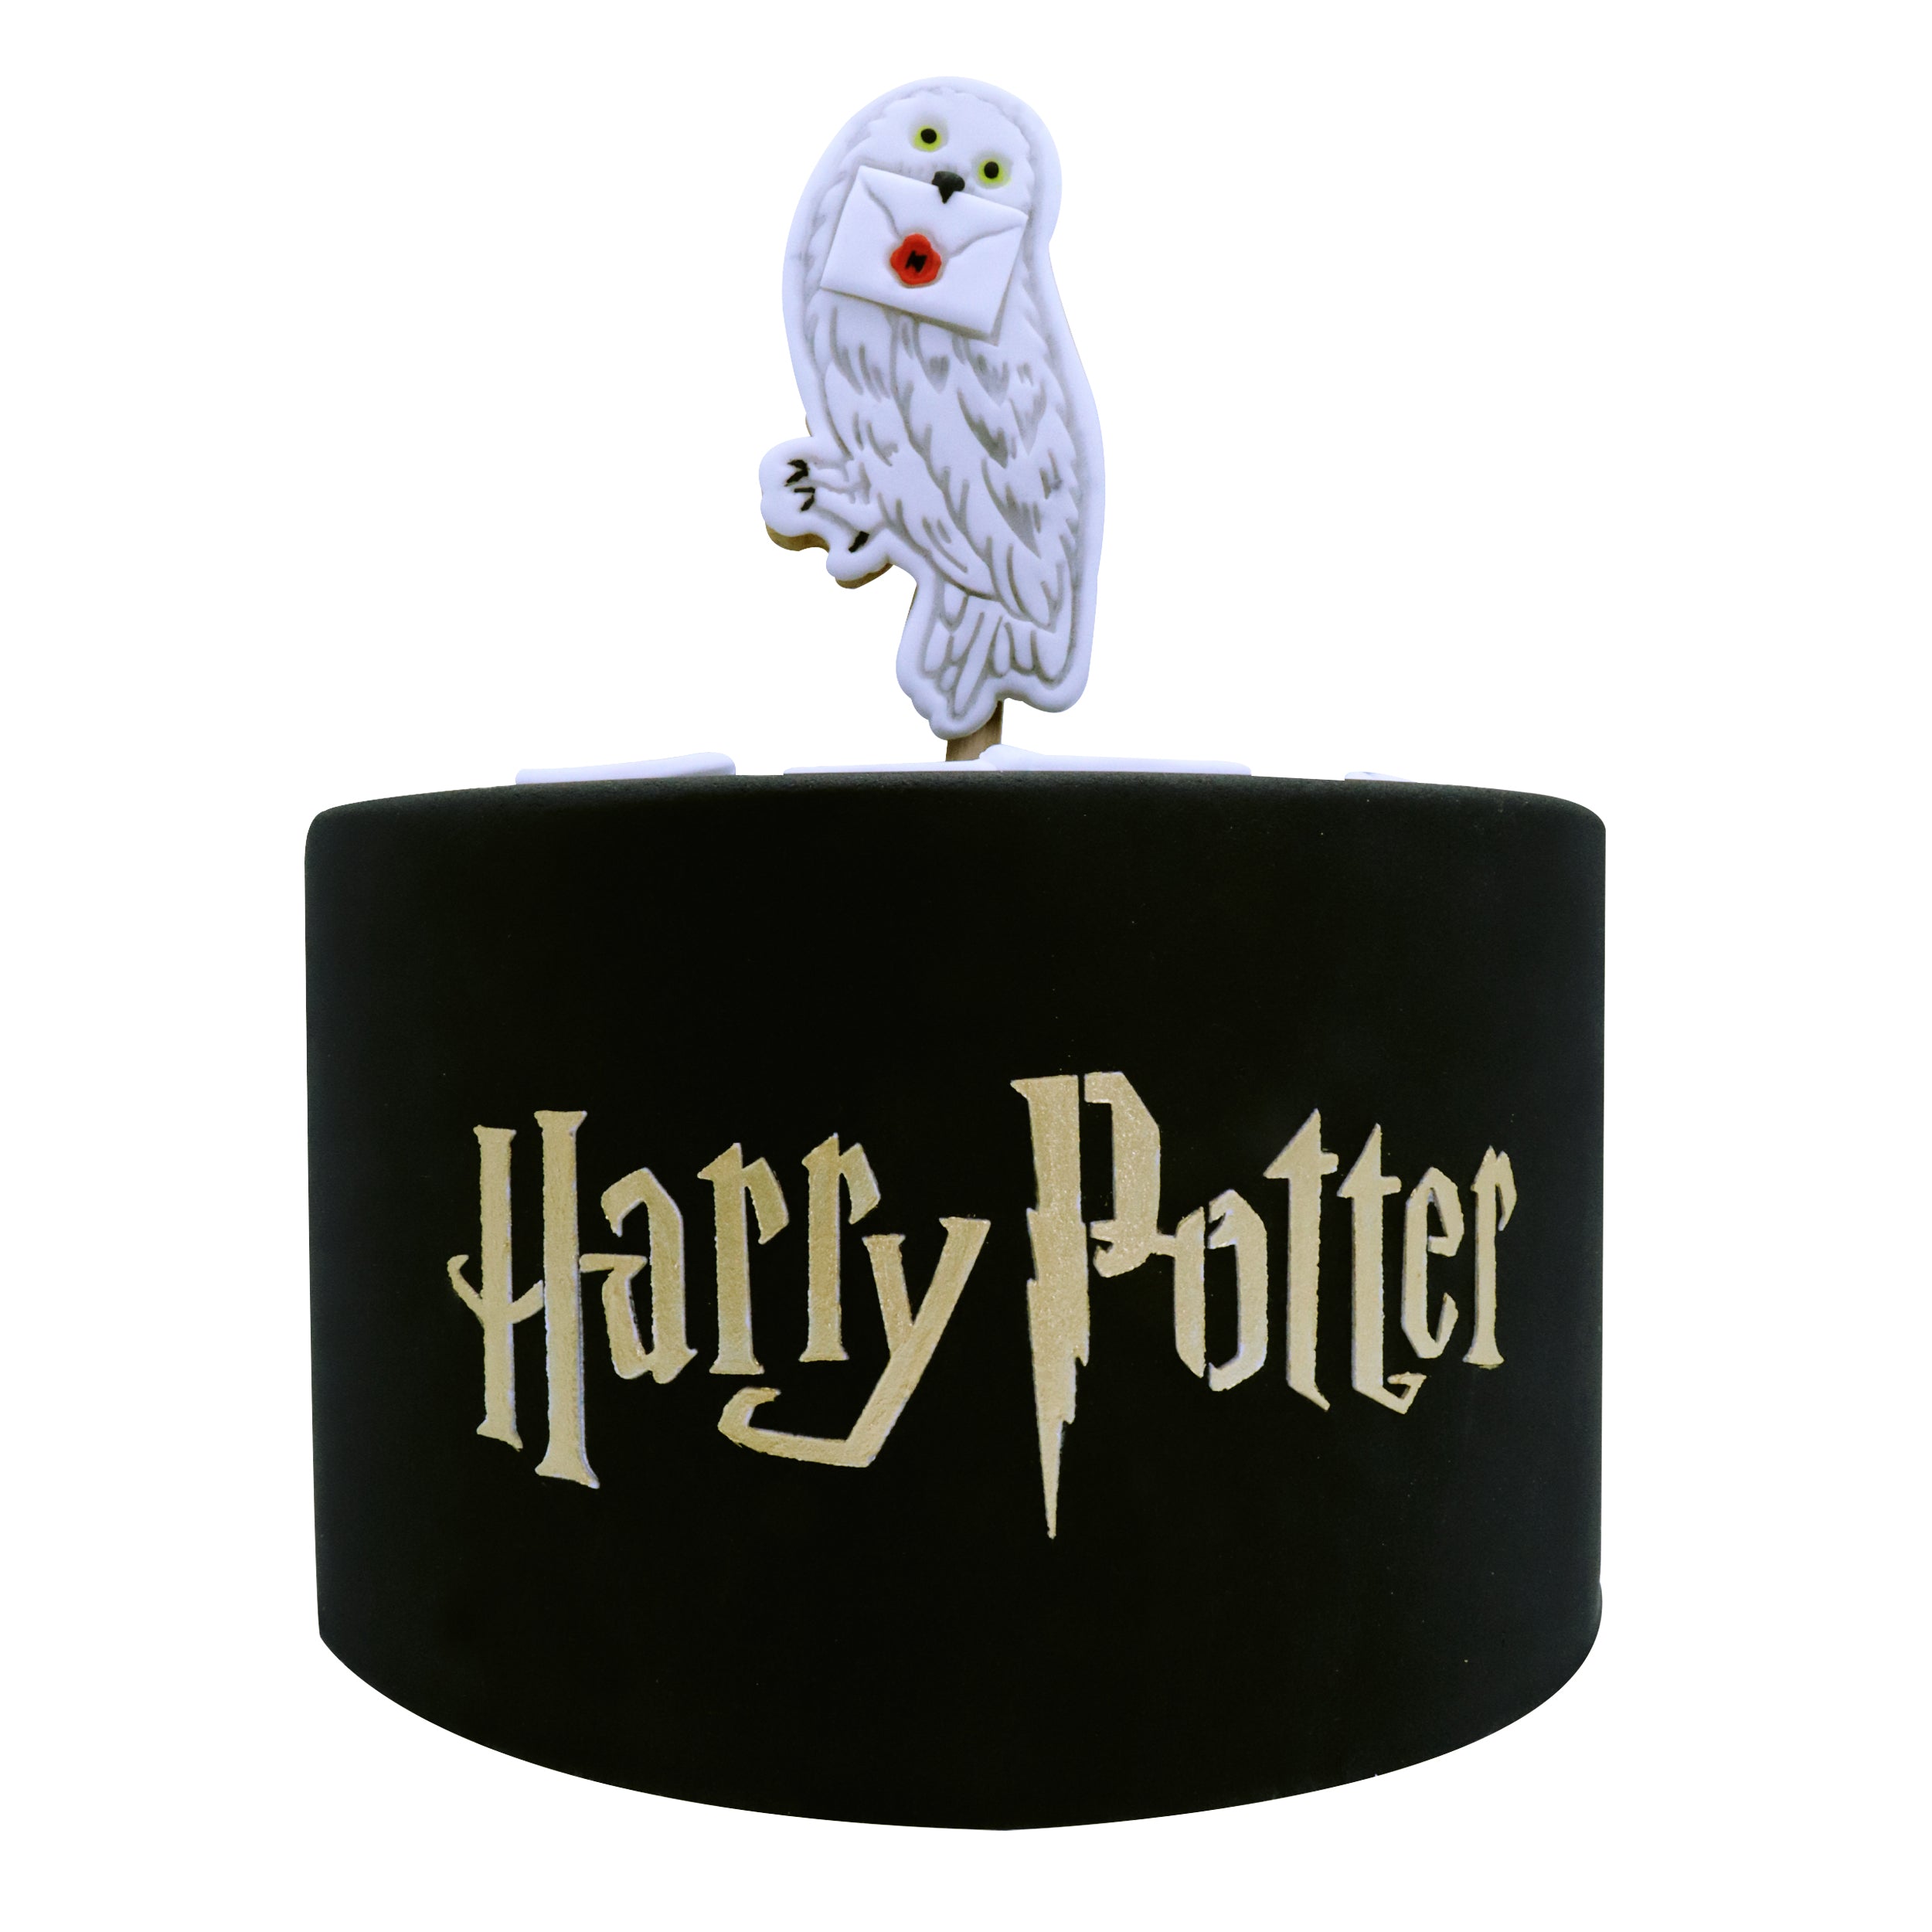 Harry Potter Cake Stencil